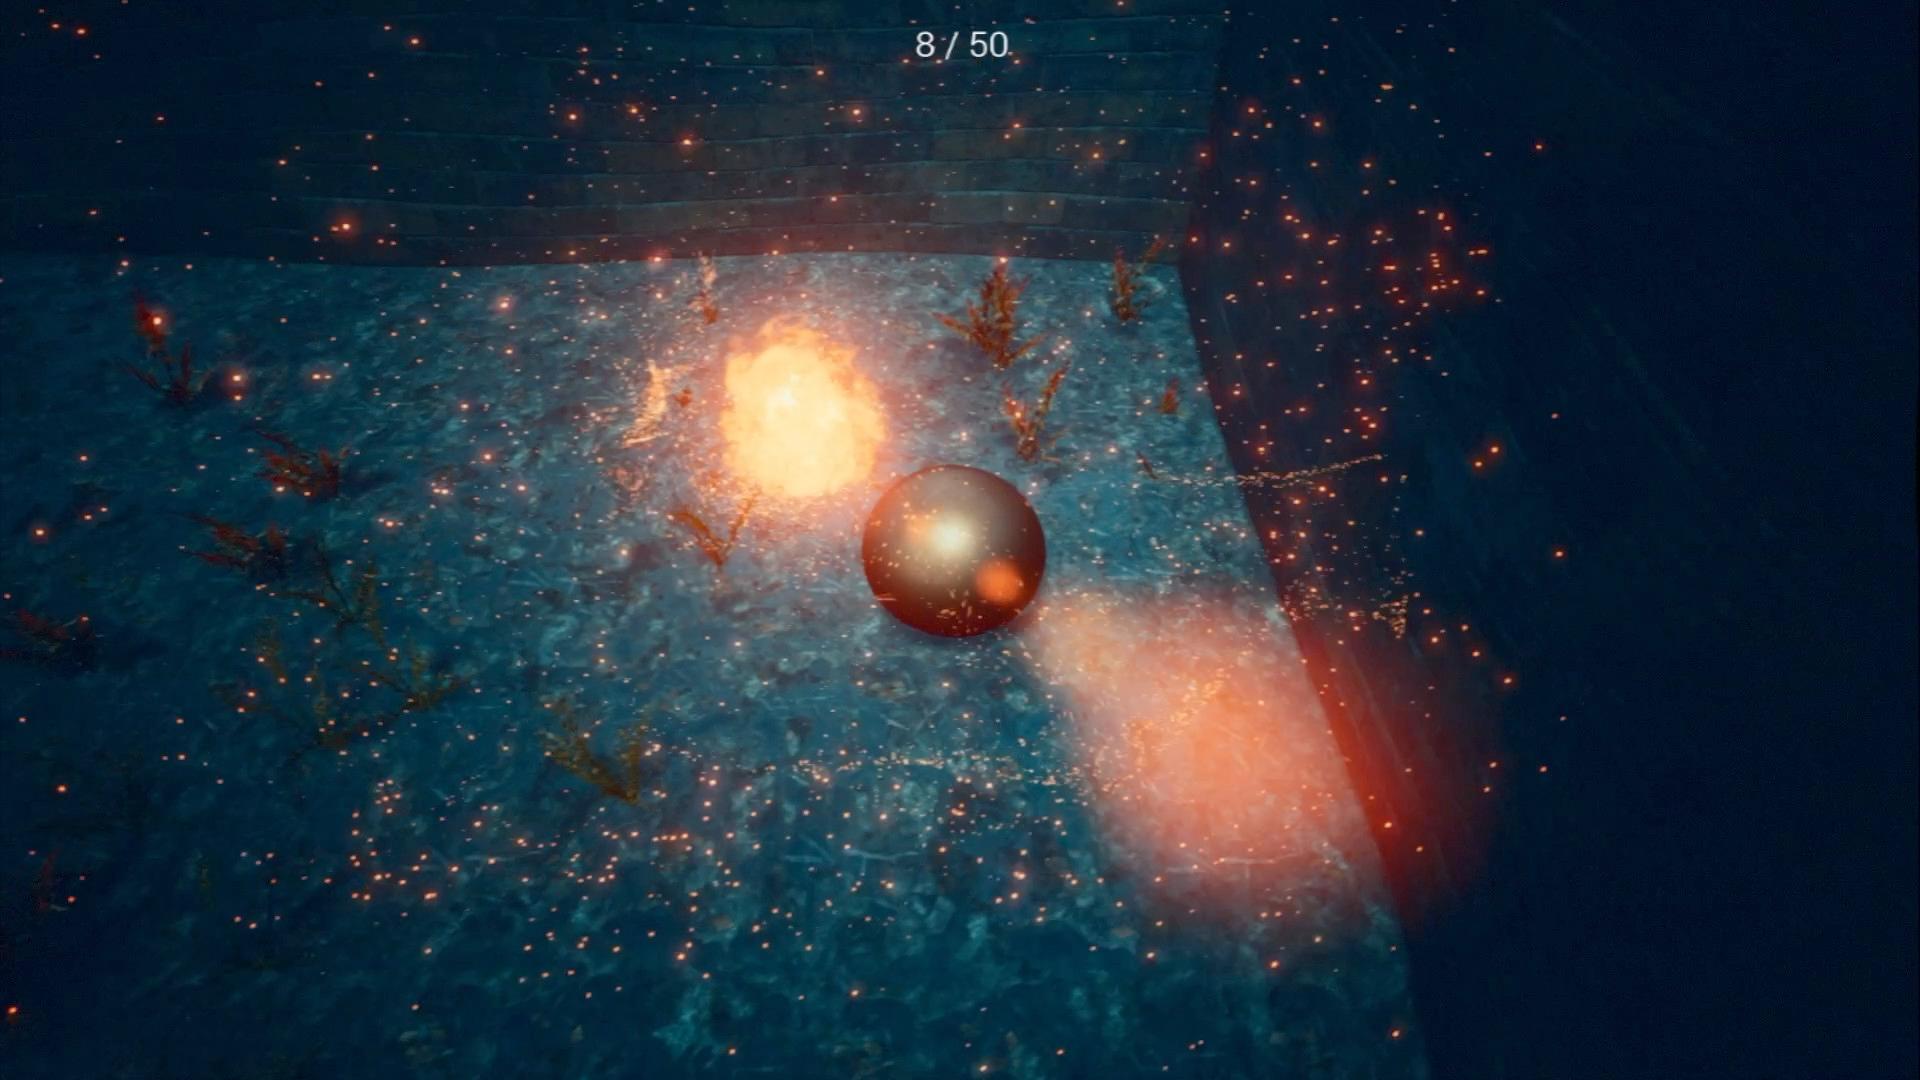 Screenshot №9 from game ZRoll